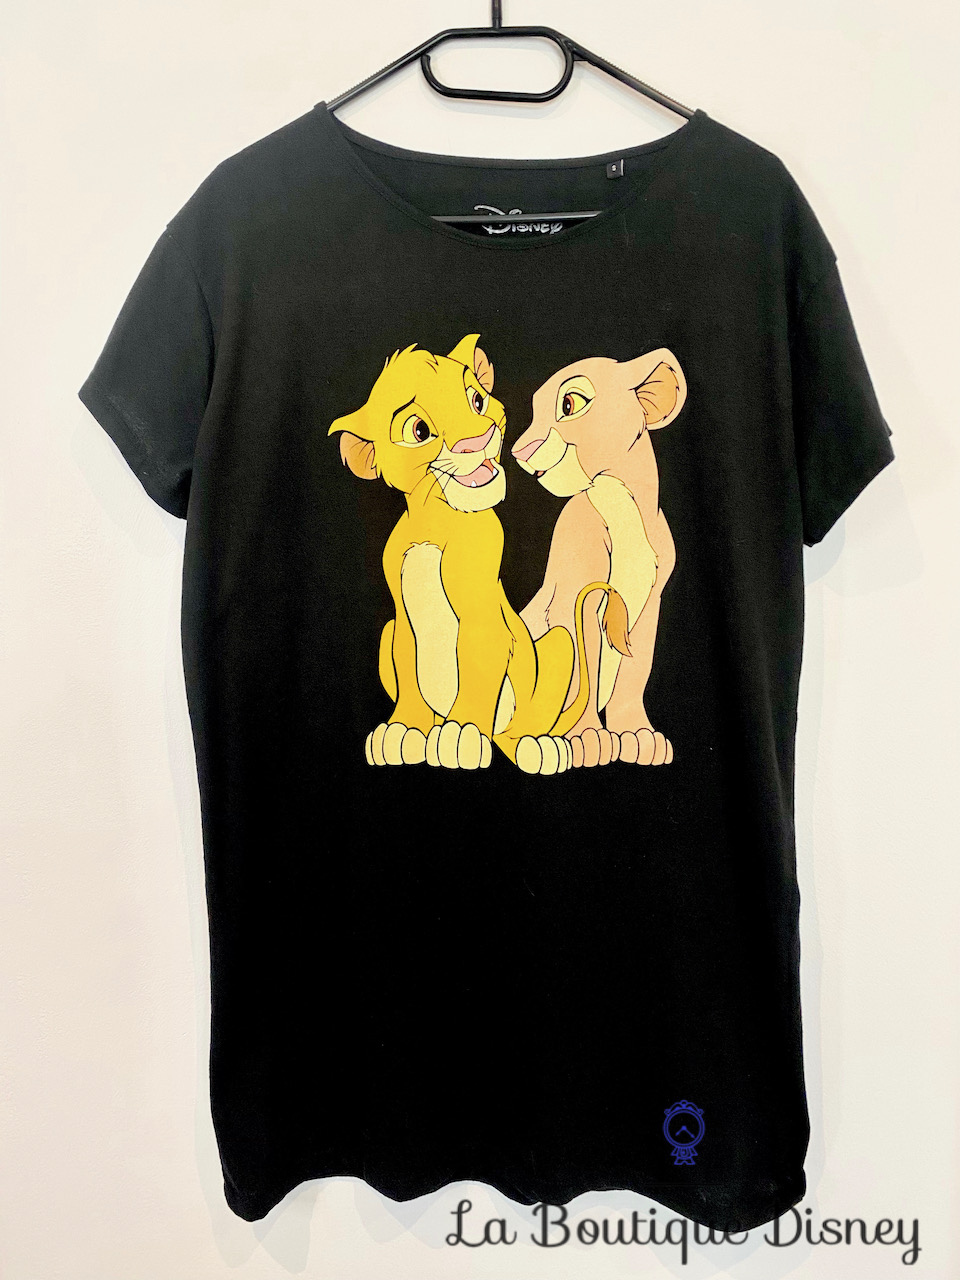 Tee shirt Simba Nala Le roi lion Disney taille S noir chemise de nuit